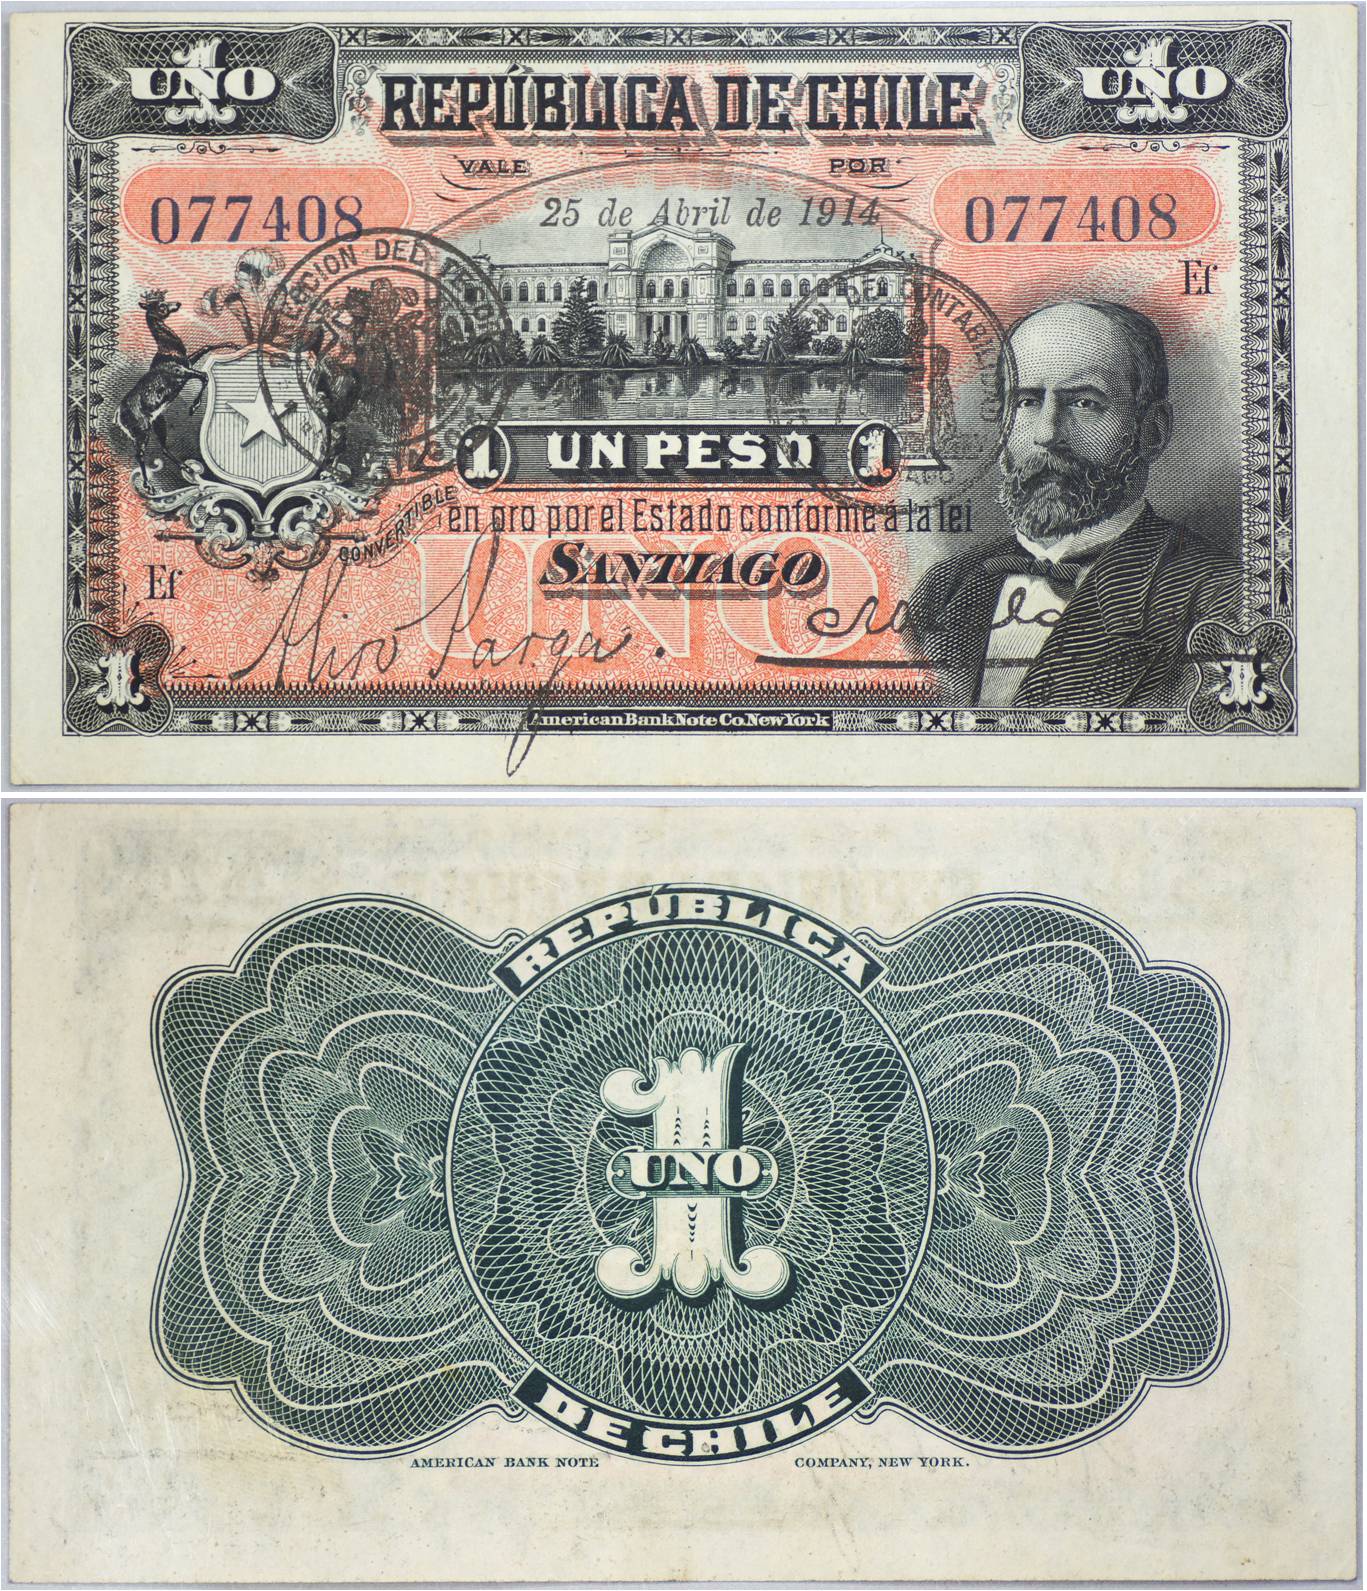 Chile 1914 25 April 1 Peso (New York).jpg